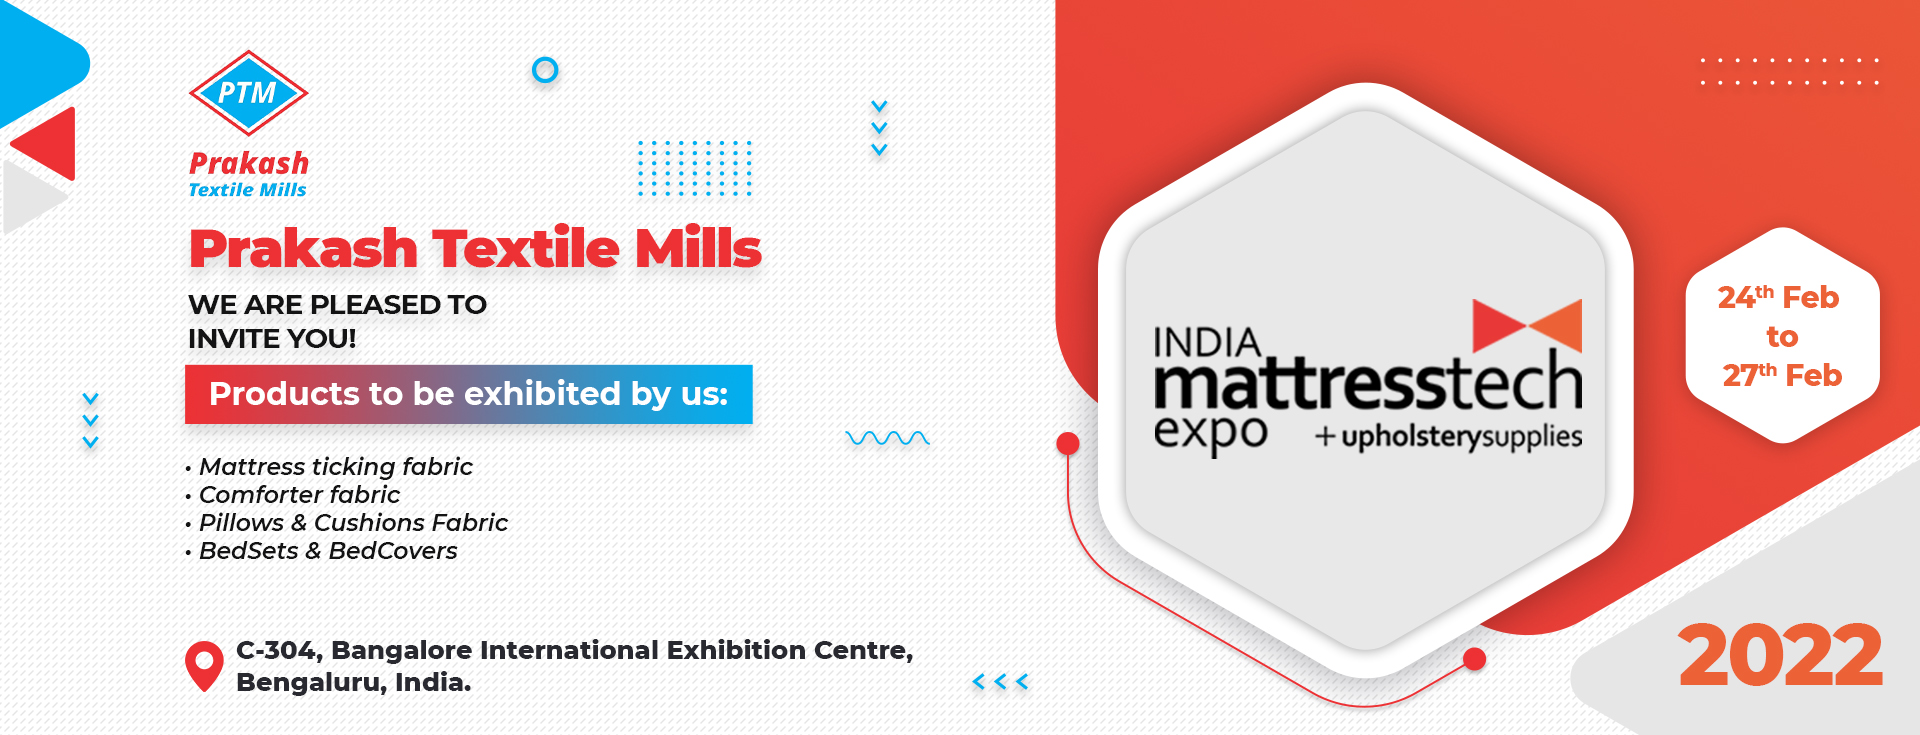 India Mattresstech Expo 2022 (Feb), Bangalore